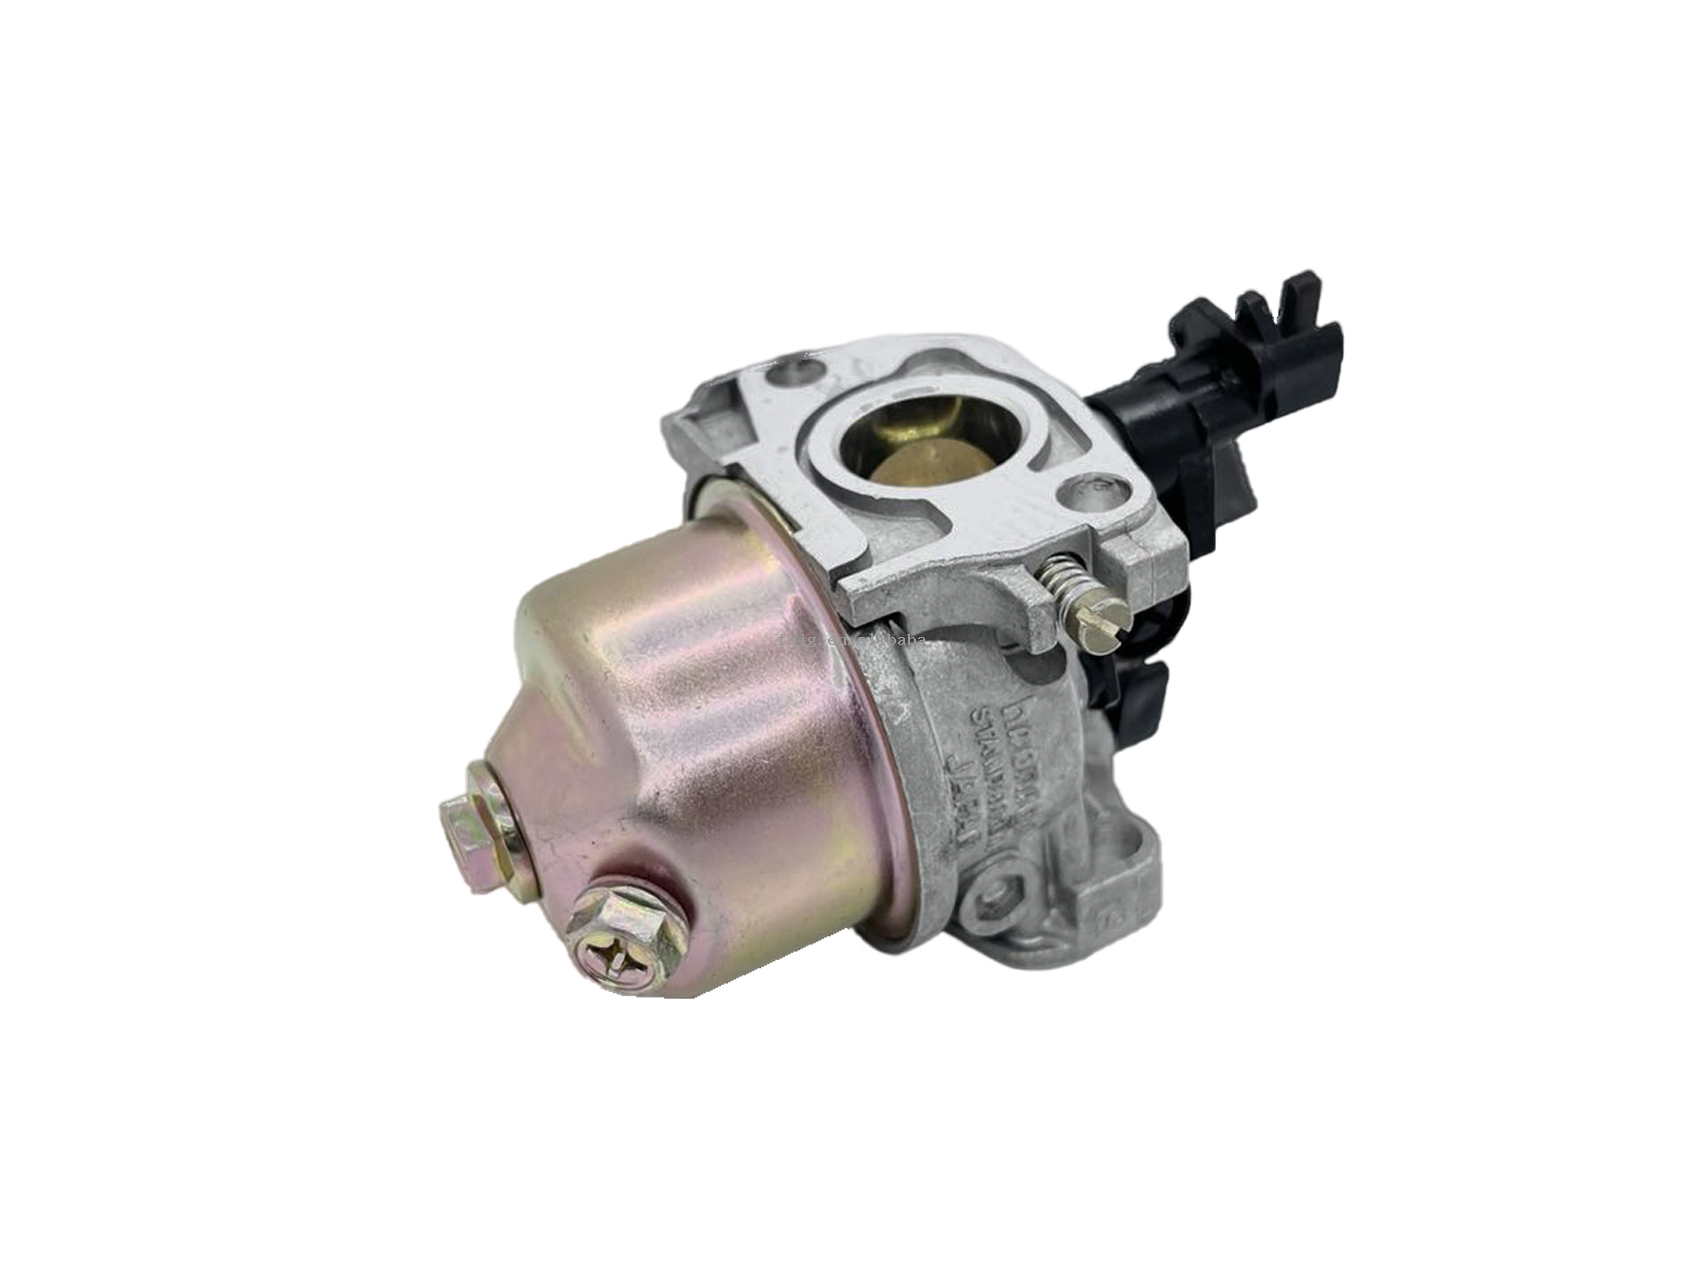 GX160 Manual Float Fuel Efficient Small Engine Generator Carburetor